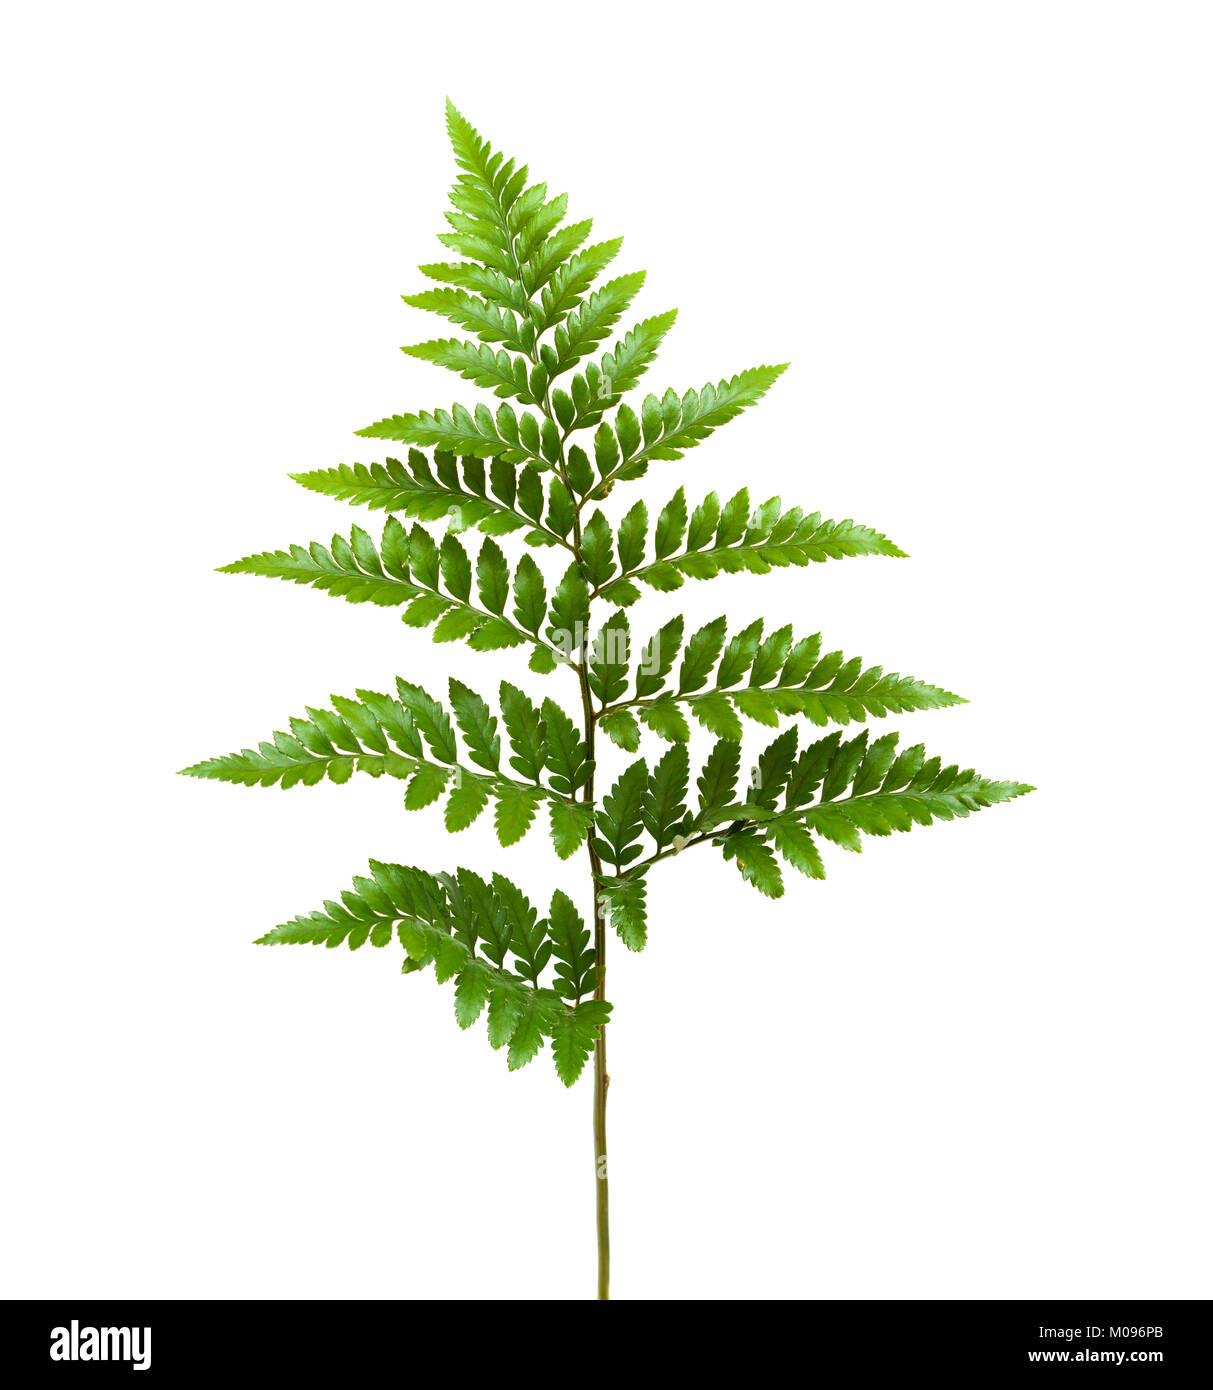 Leather-leaf fern, Rumohra adiantiformis, isolated on white background Stock Photo